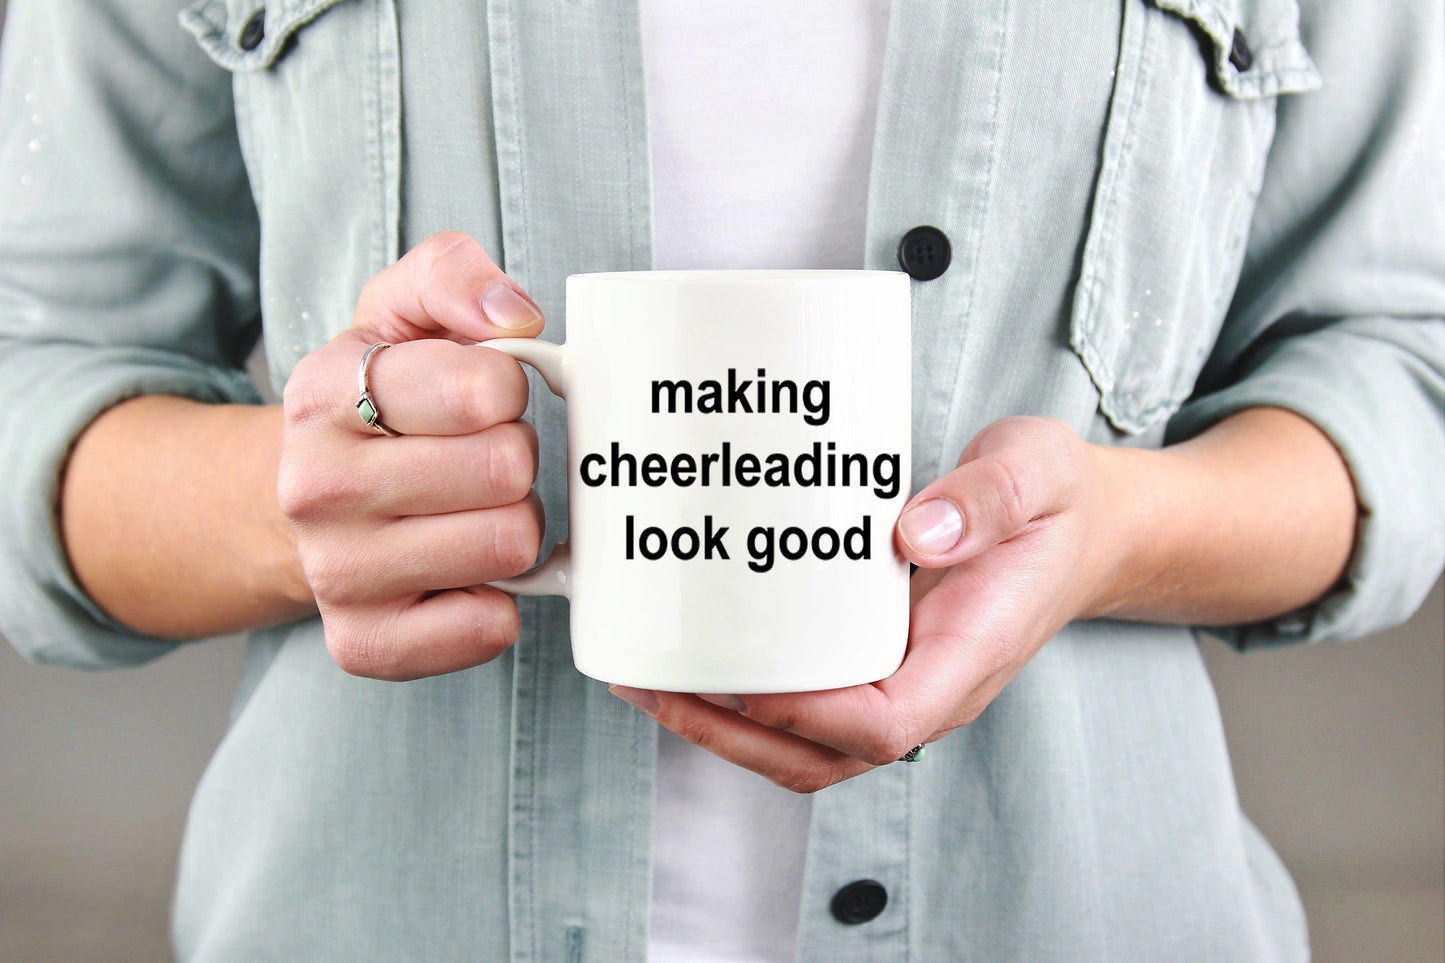 Best Cheerleader Coffee Mug Making Cheerleading Look Good